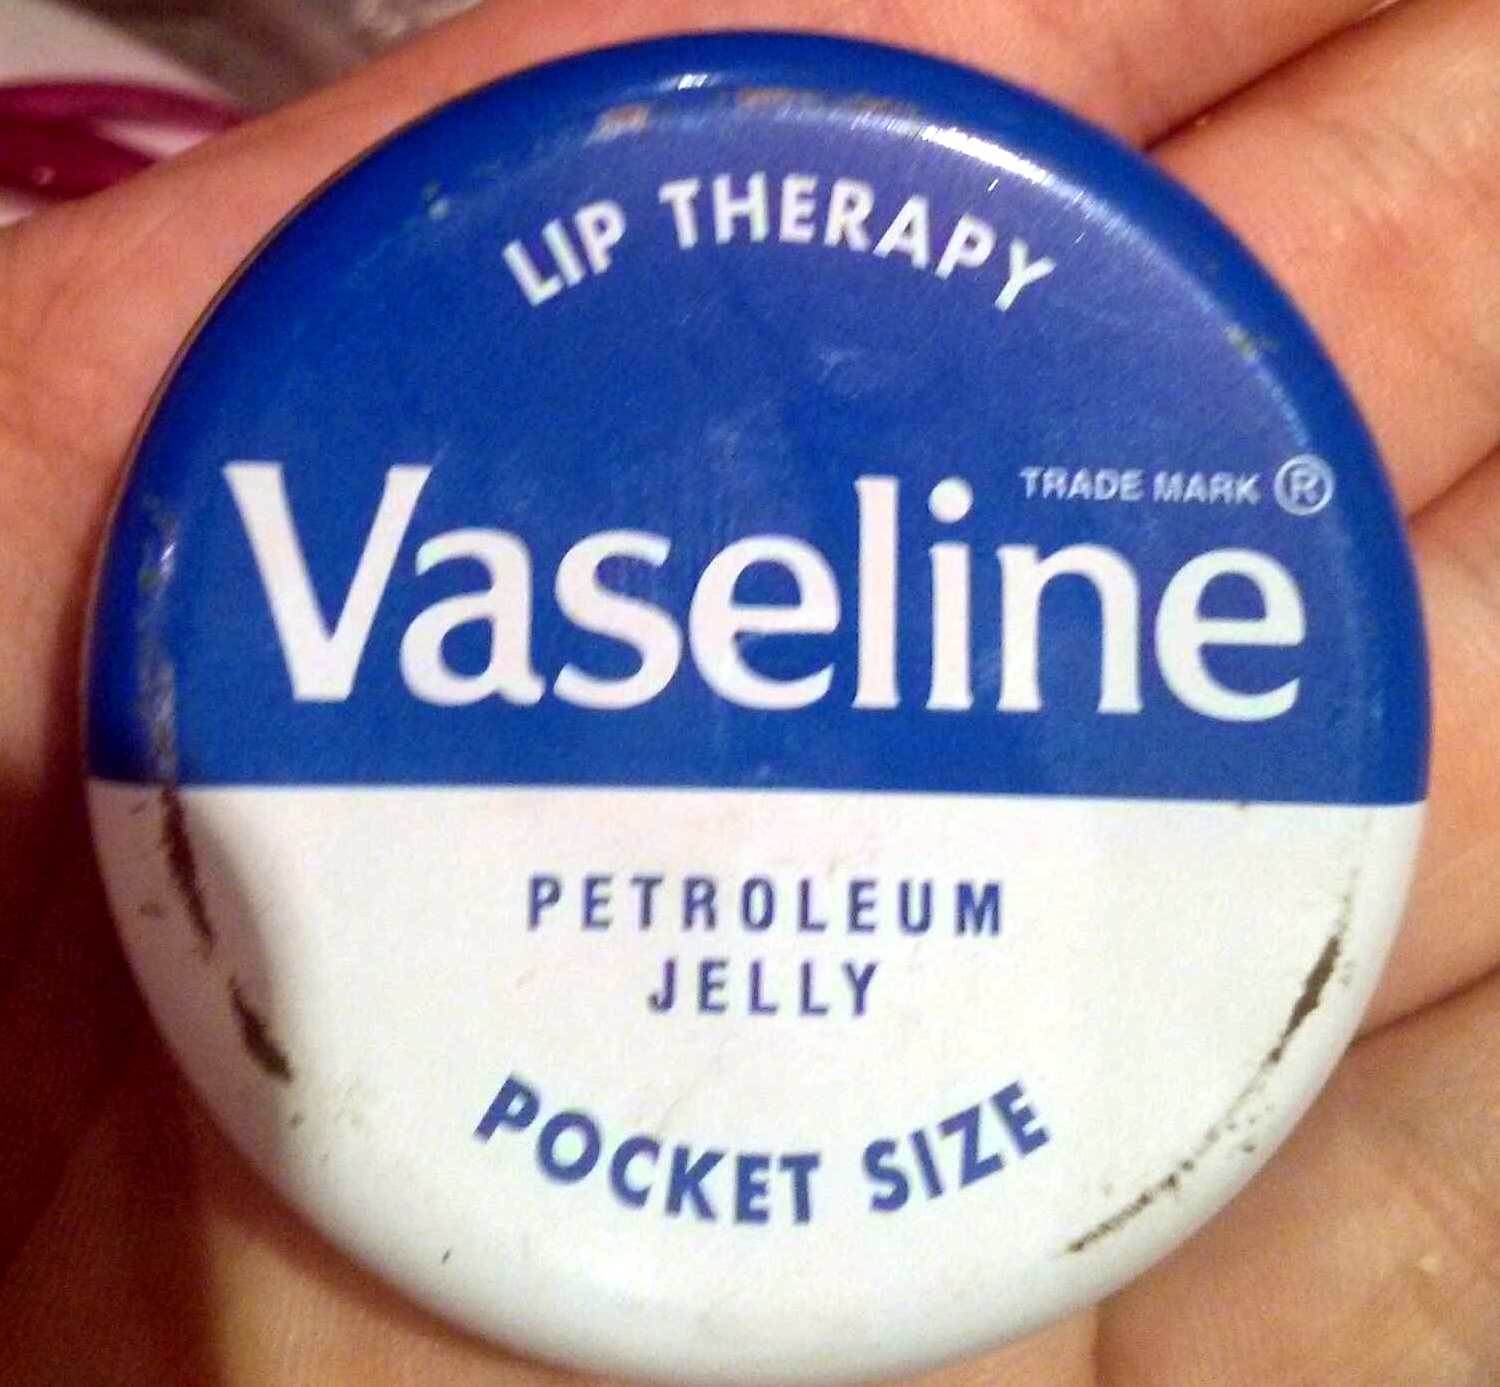 Lip therapy petroleum jelly pocket size - Produit - en